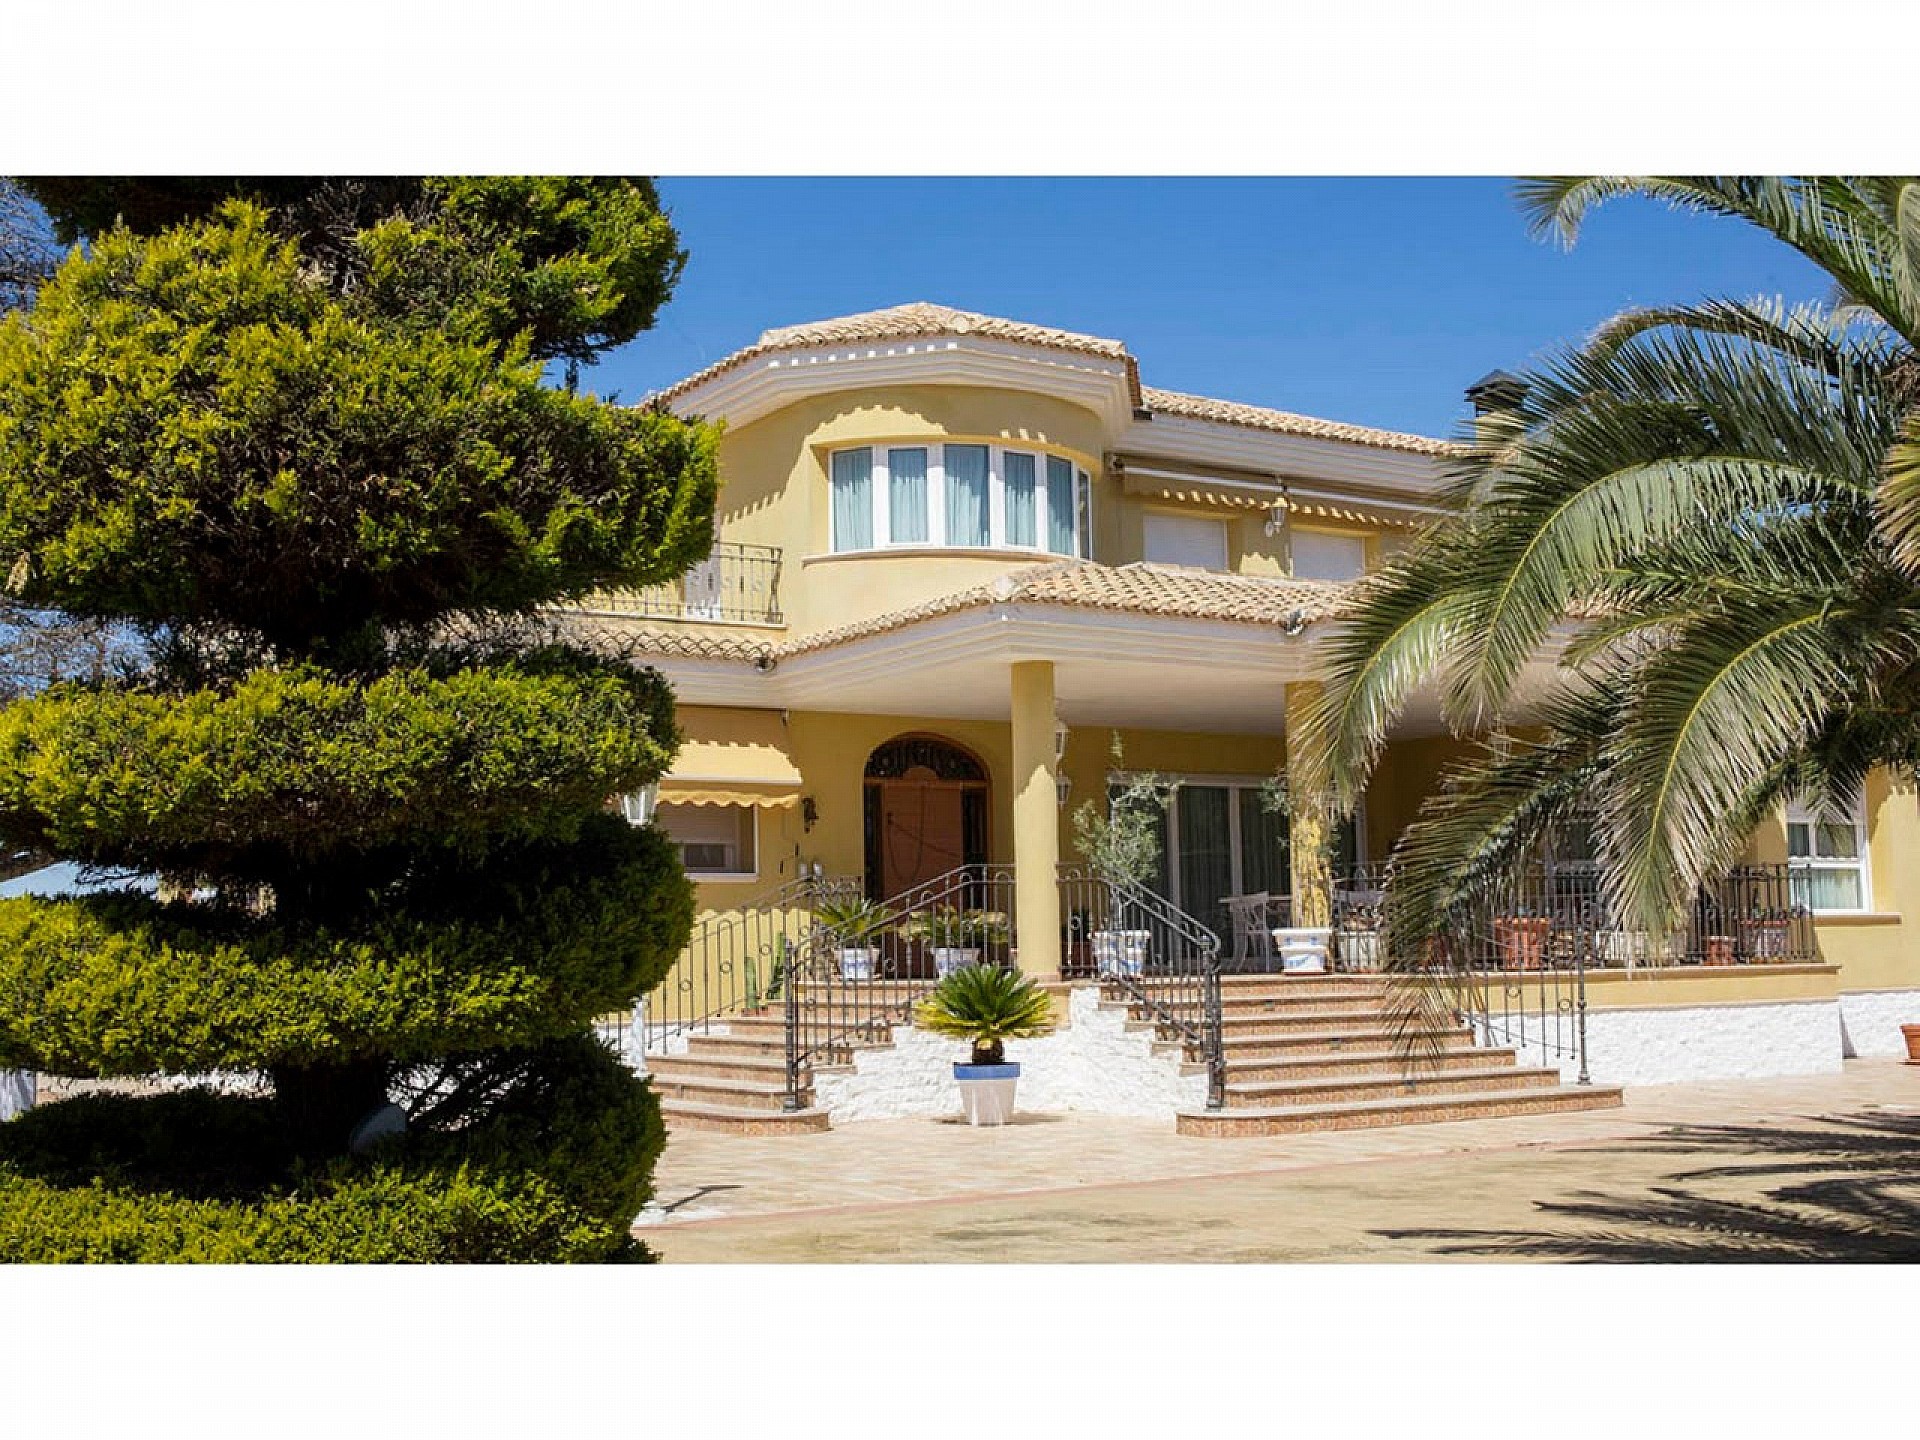 For sale: 6 bedroom house / villa in Yecla, Costa Calida